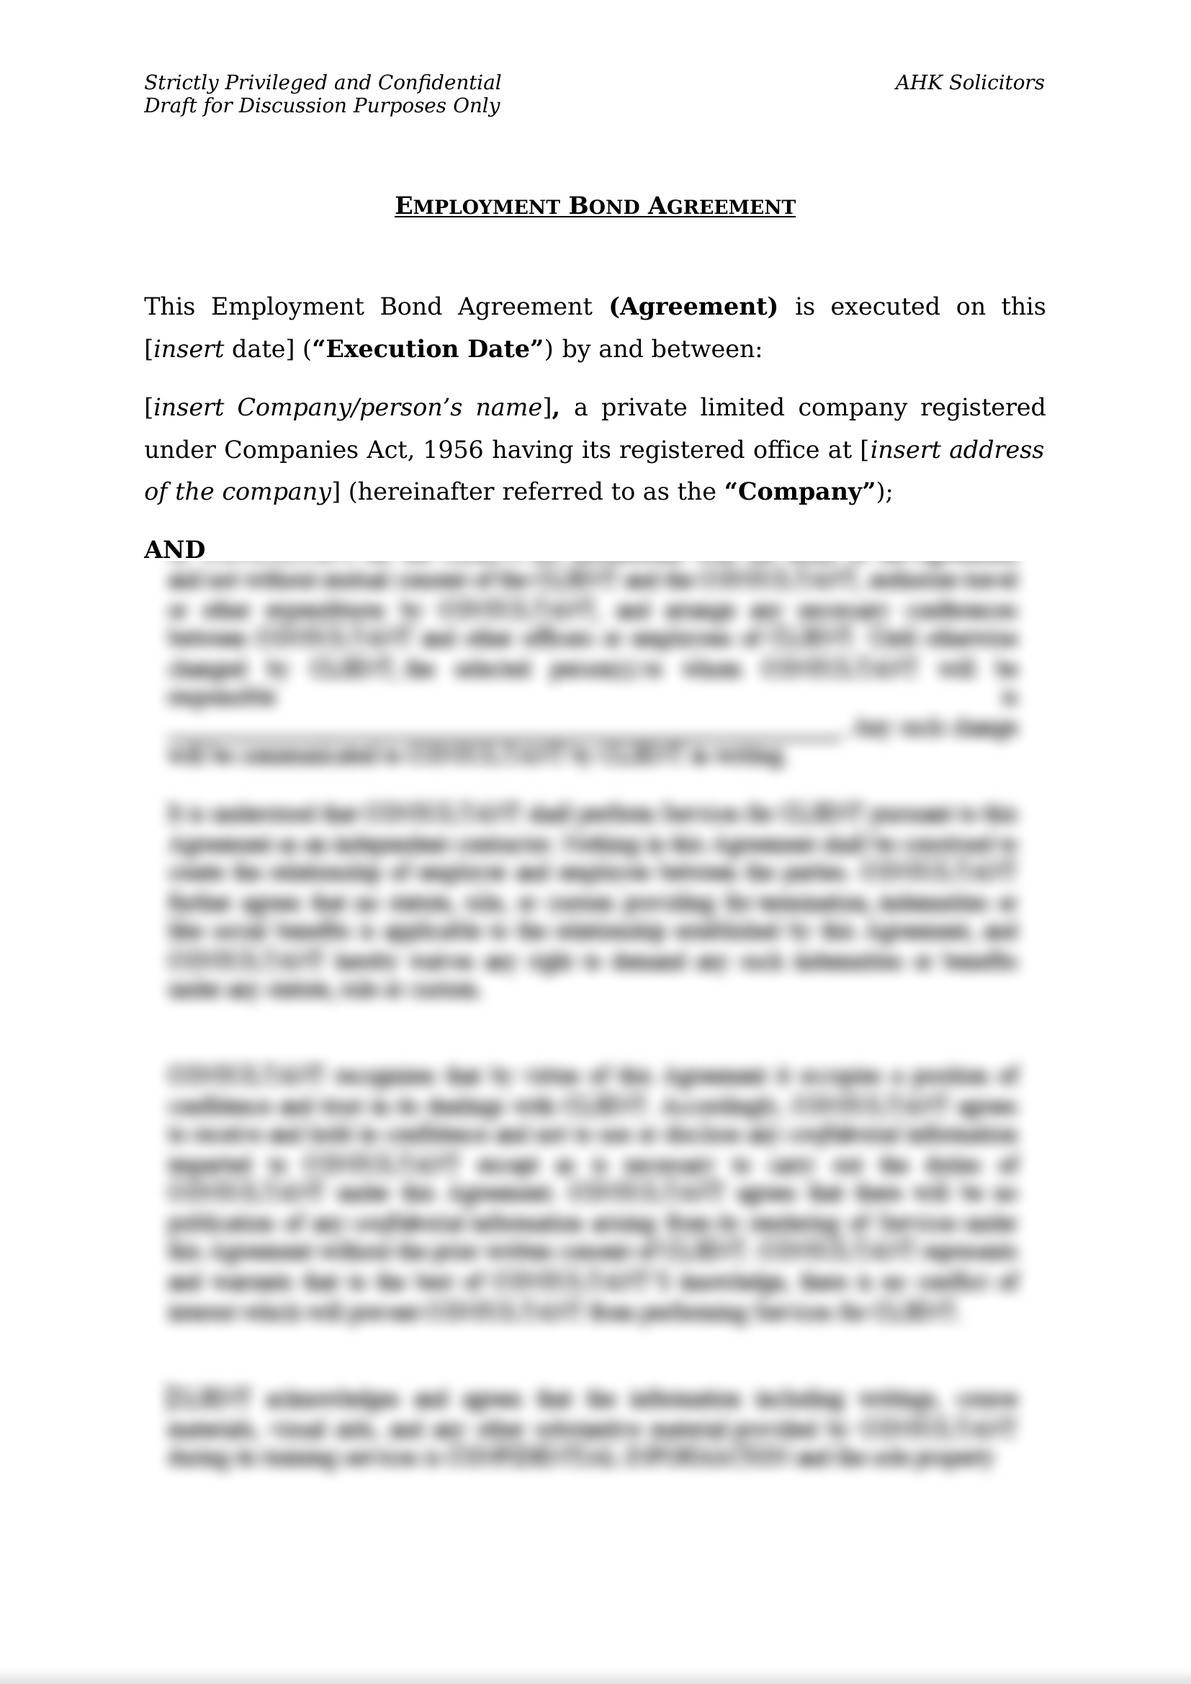 Employment Bond/Employment Bond Agreement-0